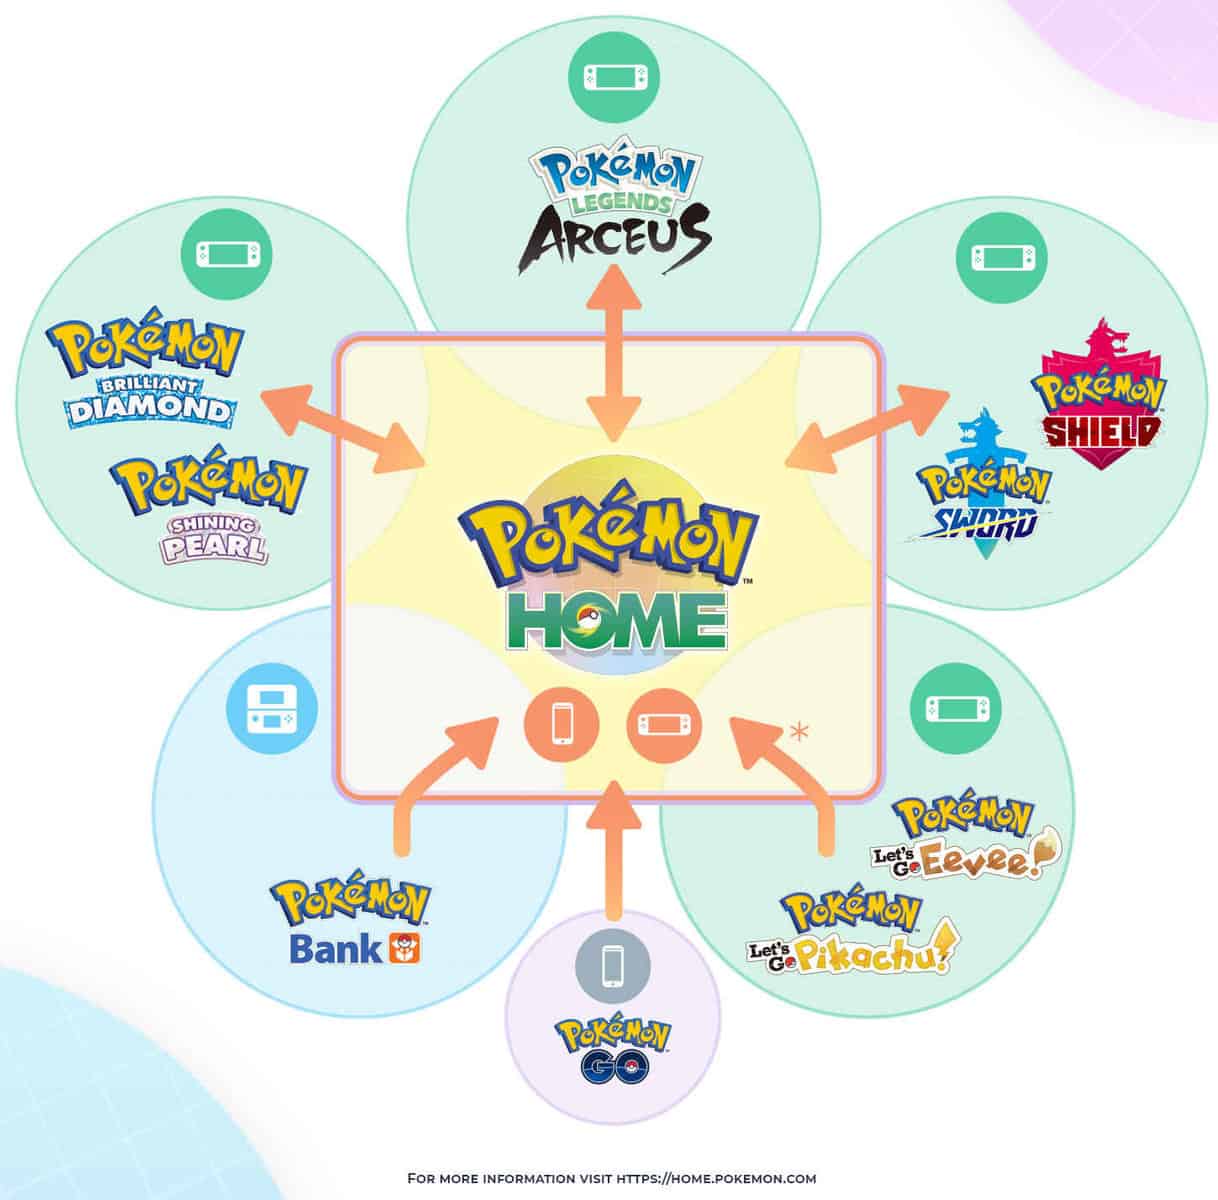 How To Transfer Pokémon From Pokémon Home To Pokémon GO